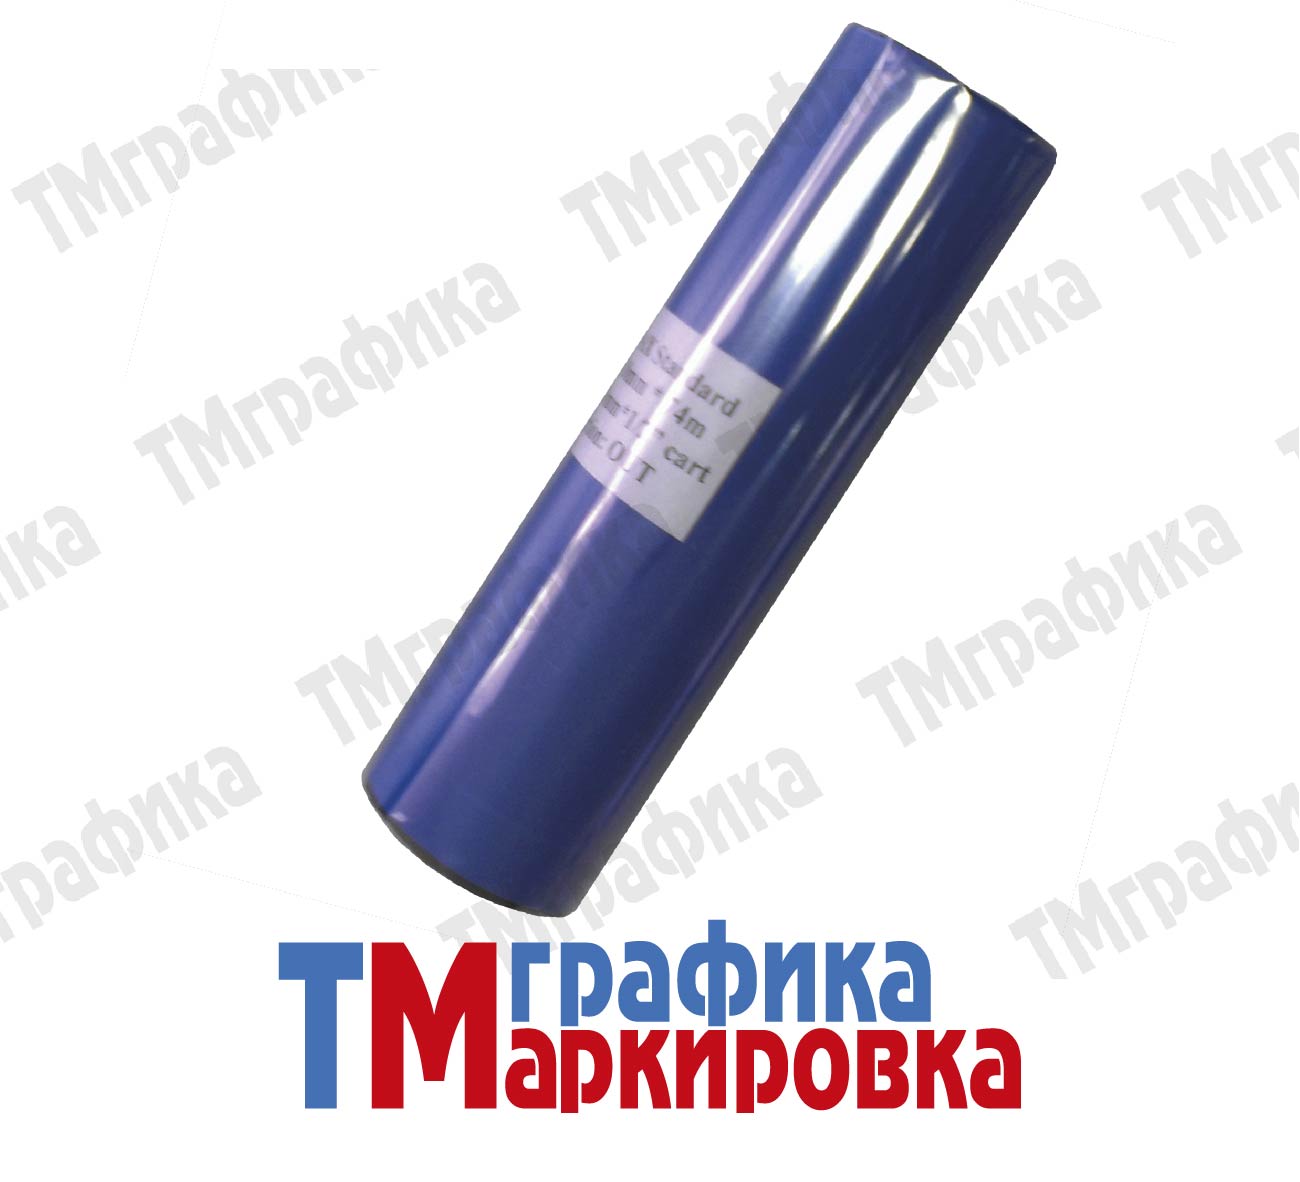 110 мм х 74 п.м. resin out черный риббон, термотрансферная лента - 949.62 руб.